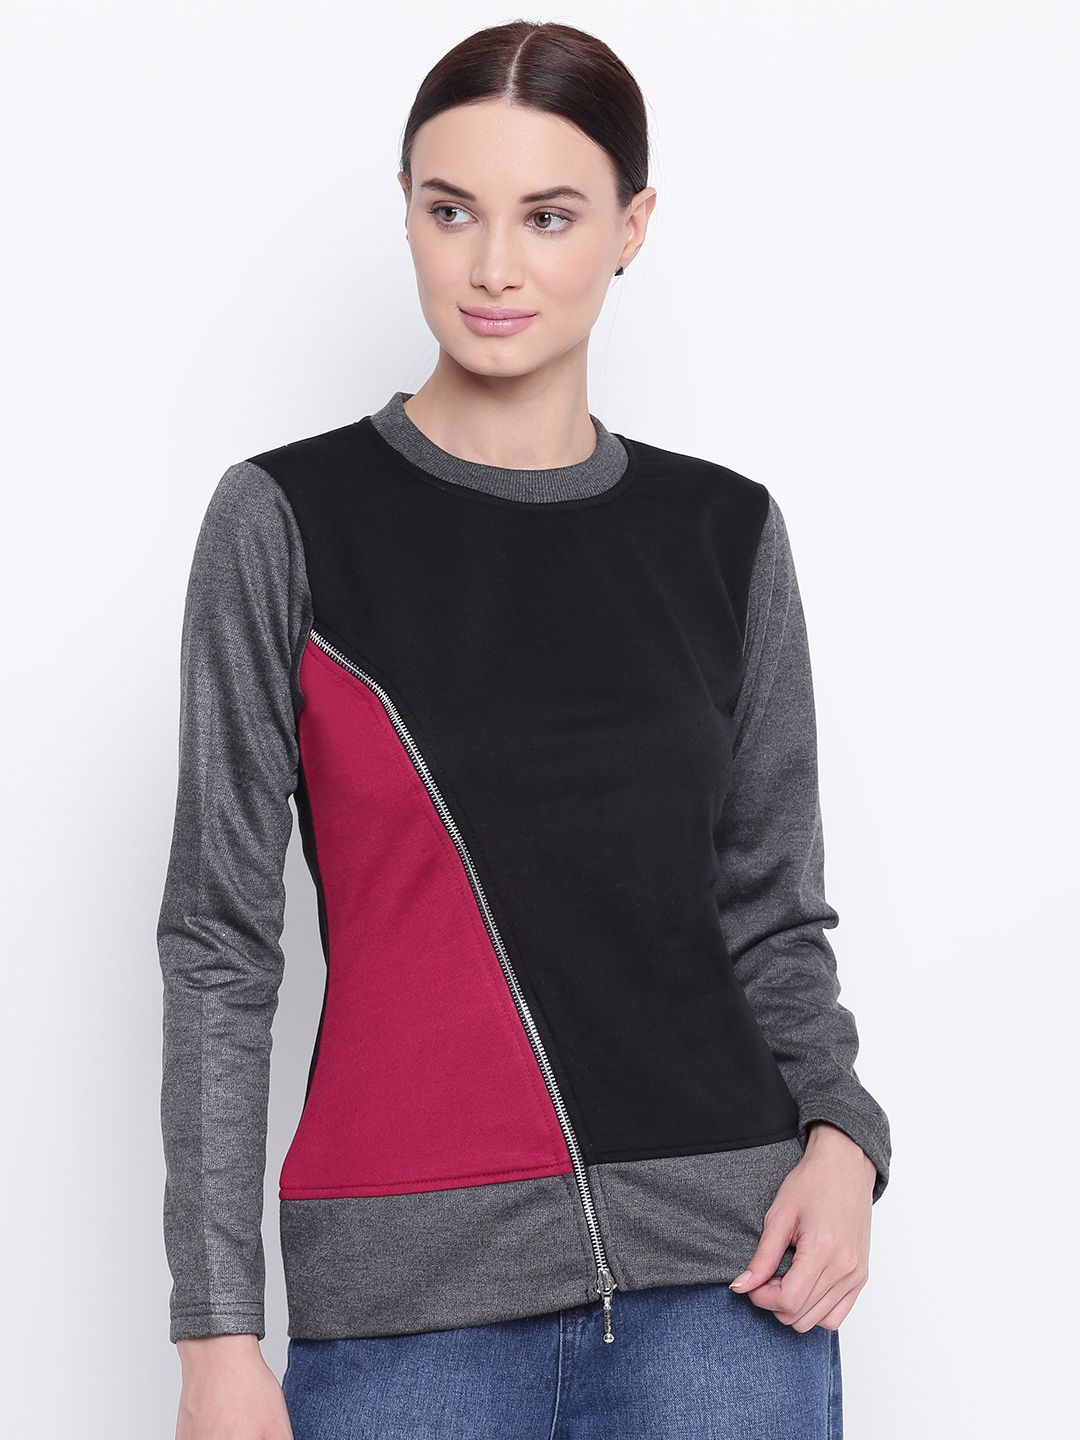 Belle Fille Women Black & Maroon Colourblocked Sweatshirt Price in India